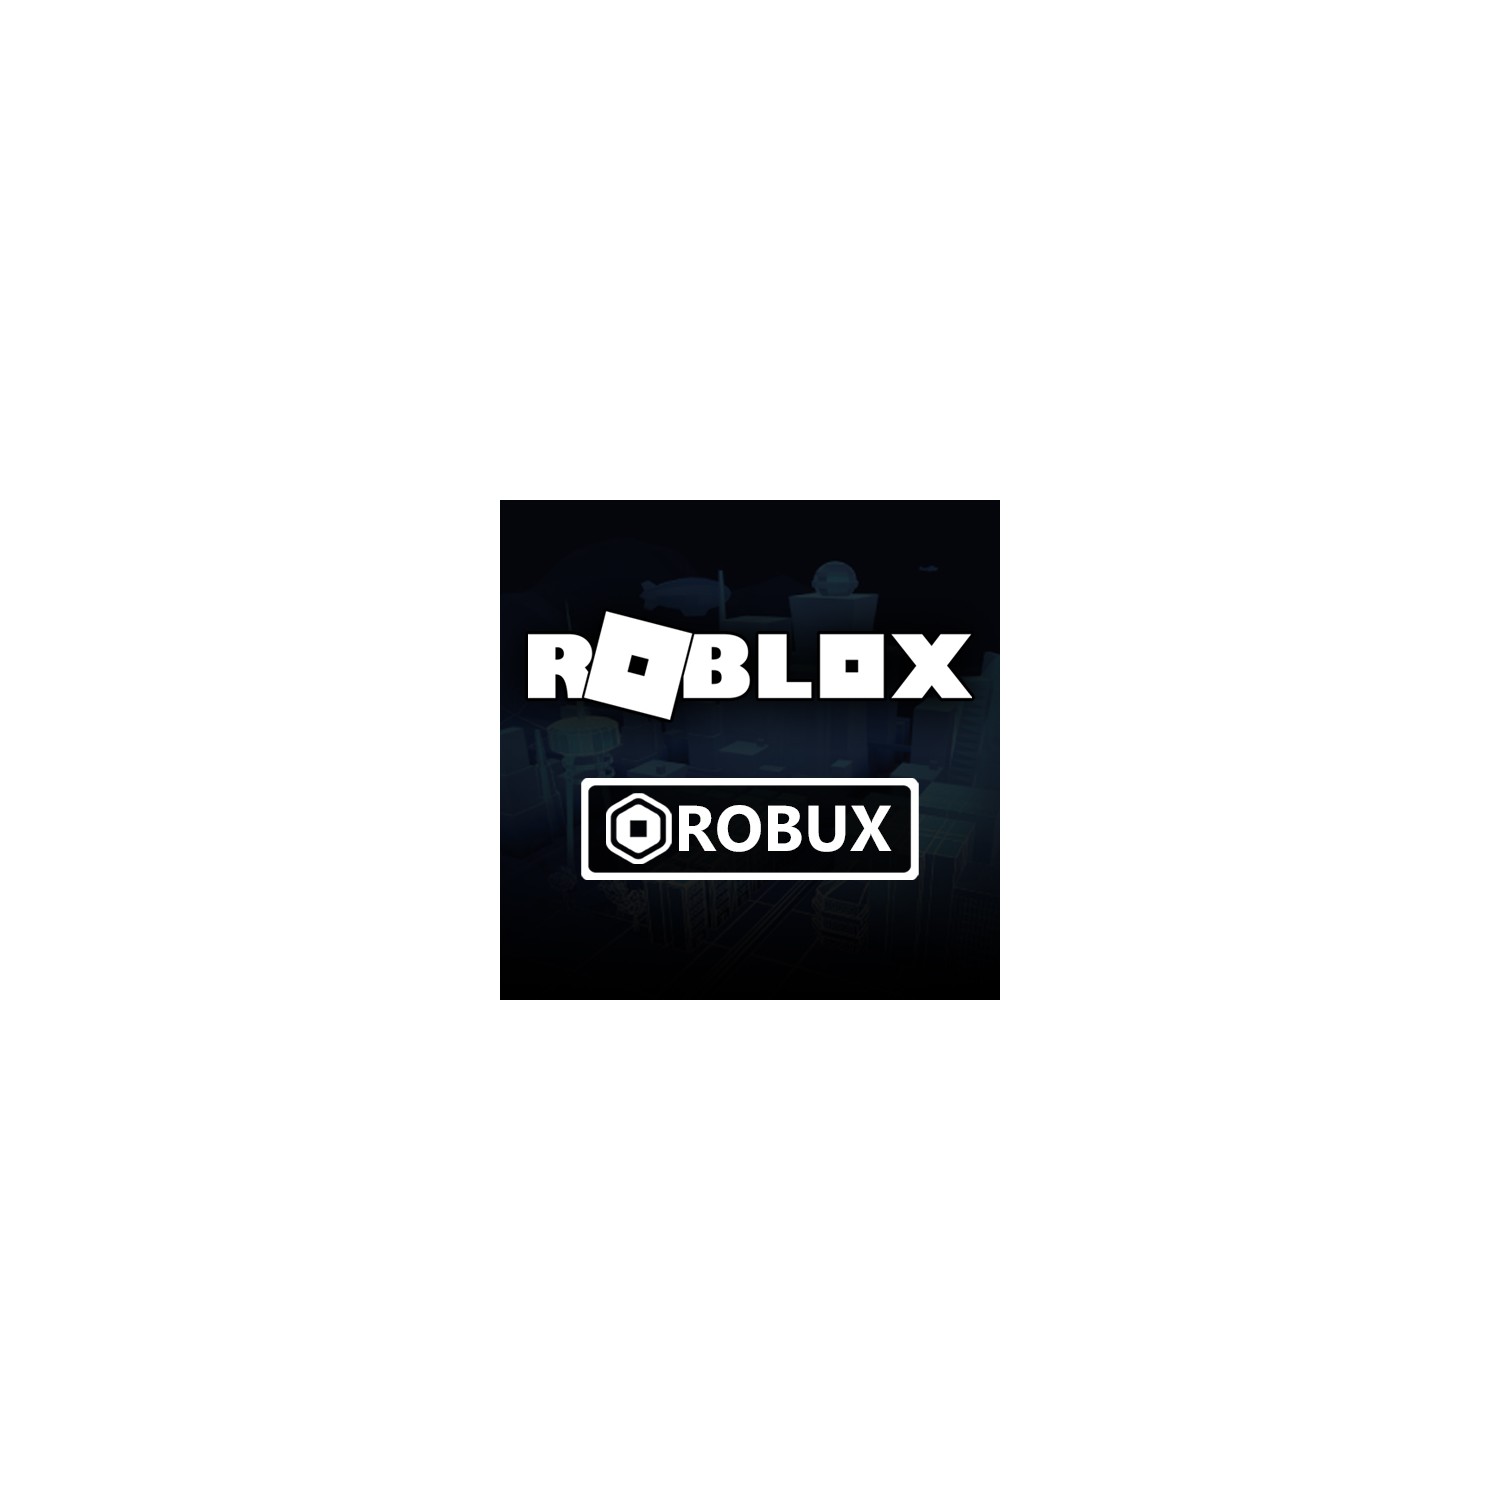 Roblox 800 Robux Fiyati Taksit Secenekleri Ile Satin Al - 40 robux kaç tl 2021